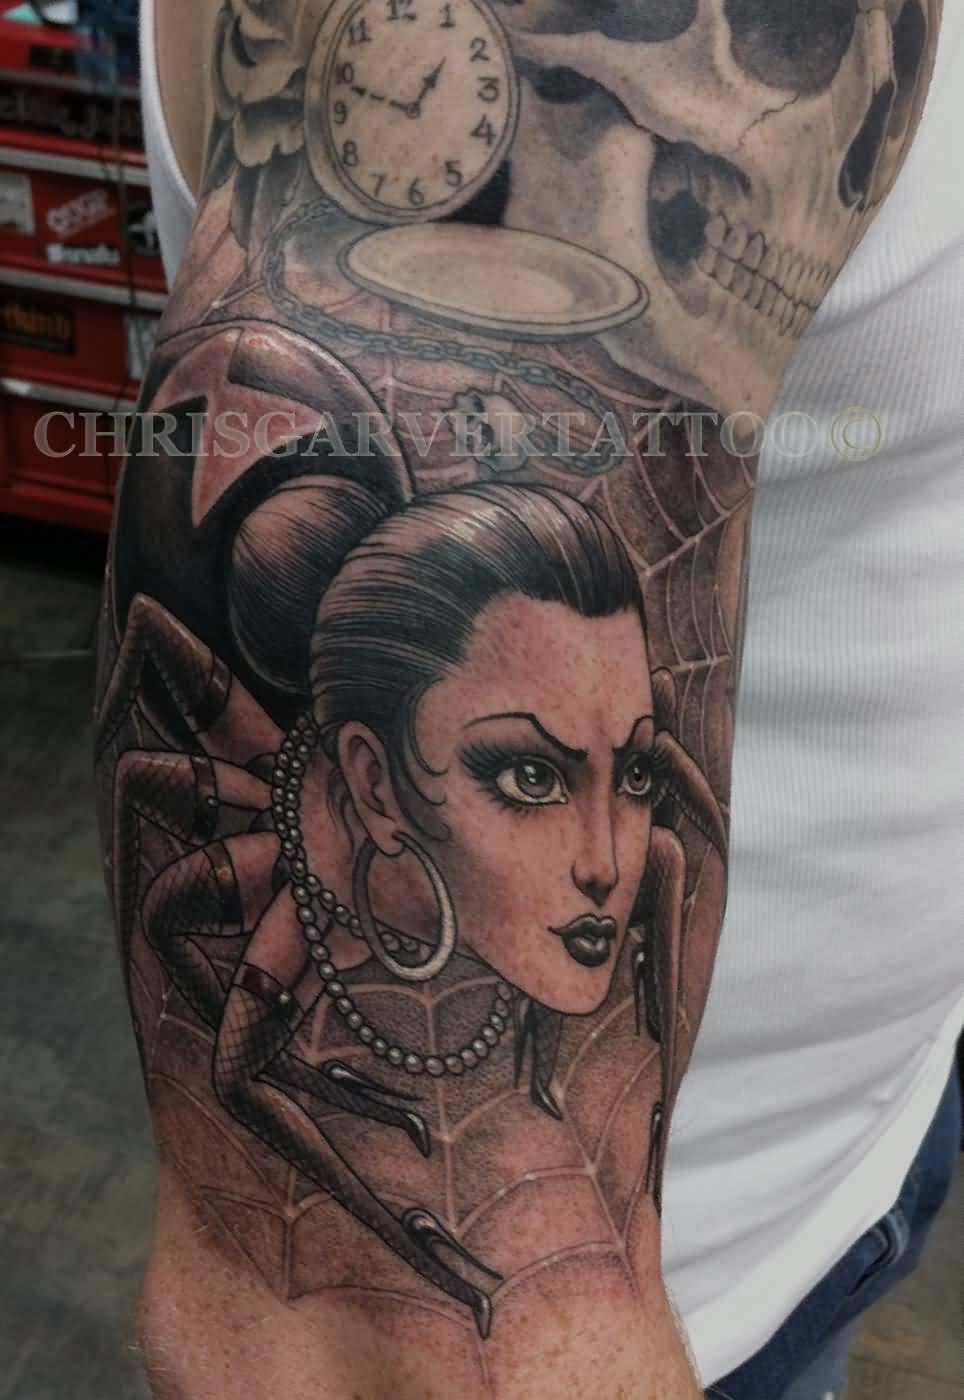 Chris Garver Tattoo On Man Right Half Sleeve